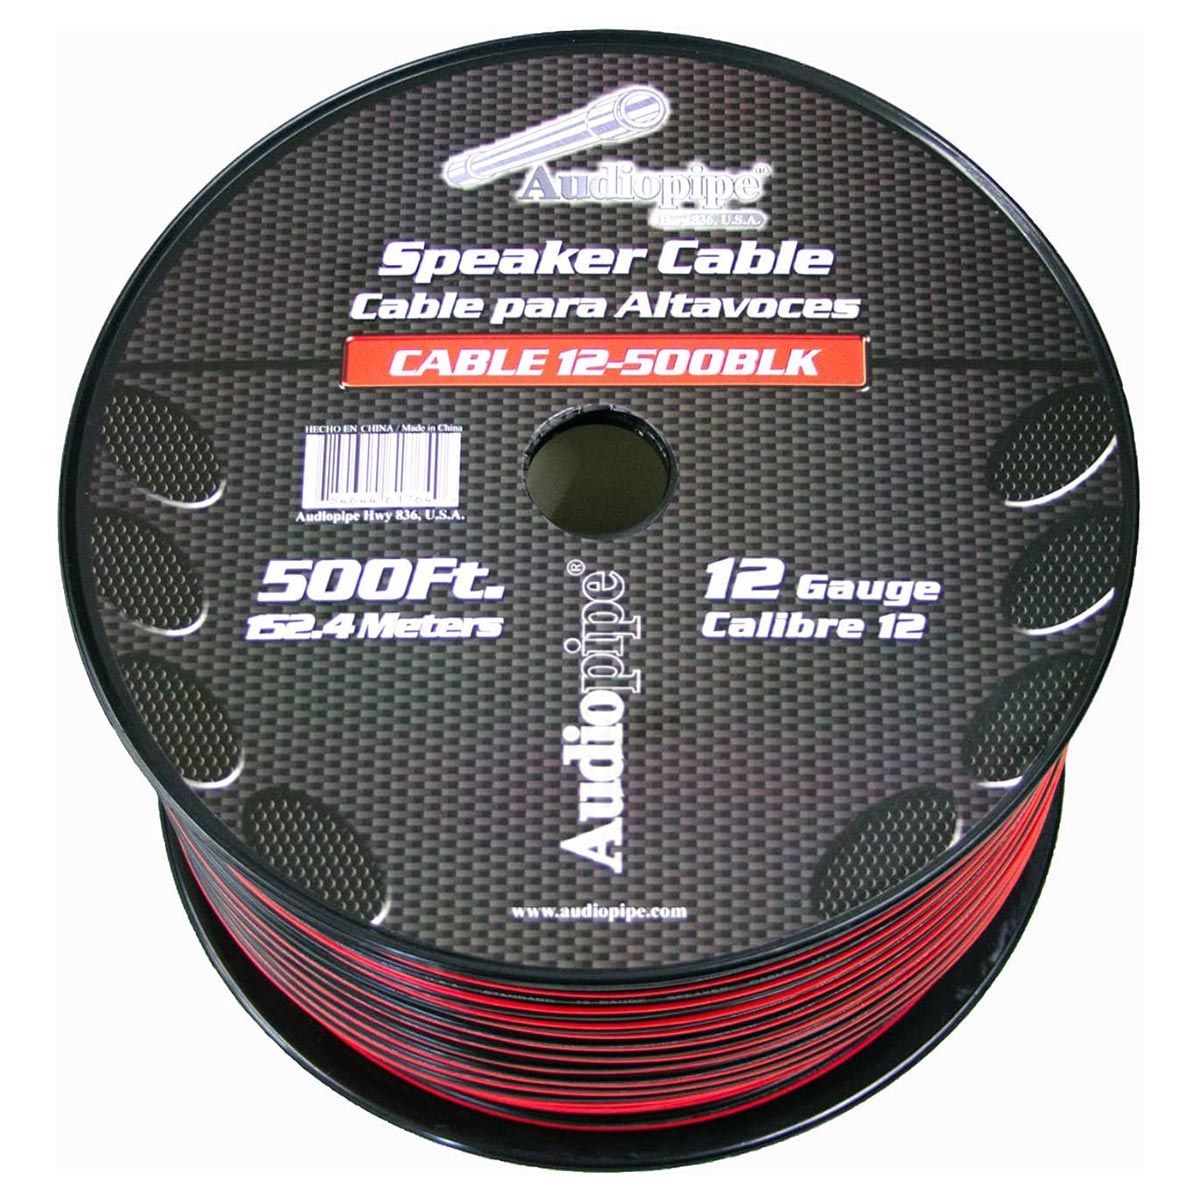 Speaker Cable 12ga. 500' Audiopipe;red + Black